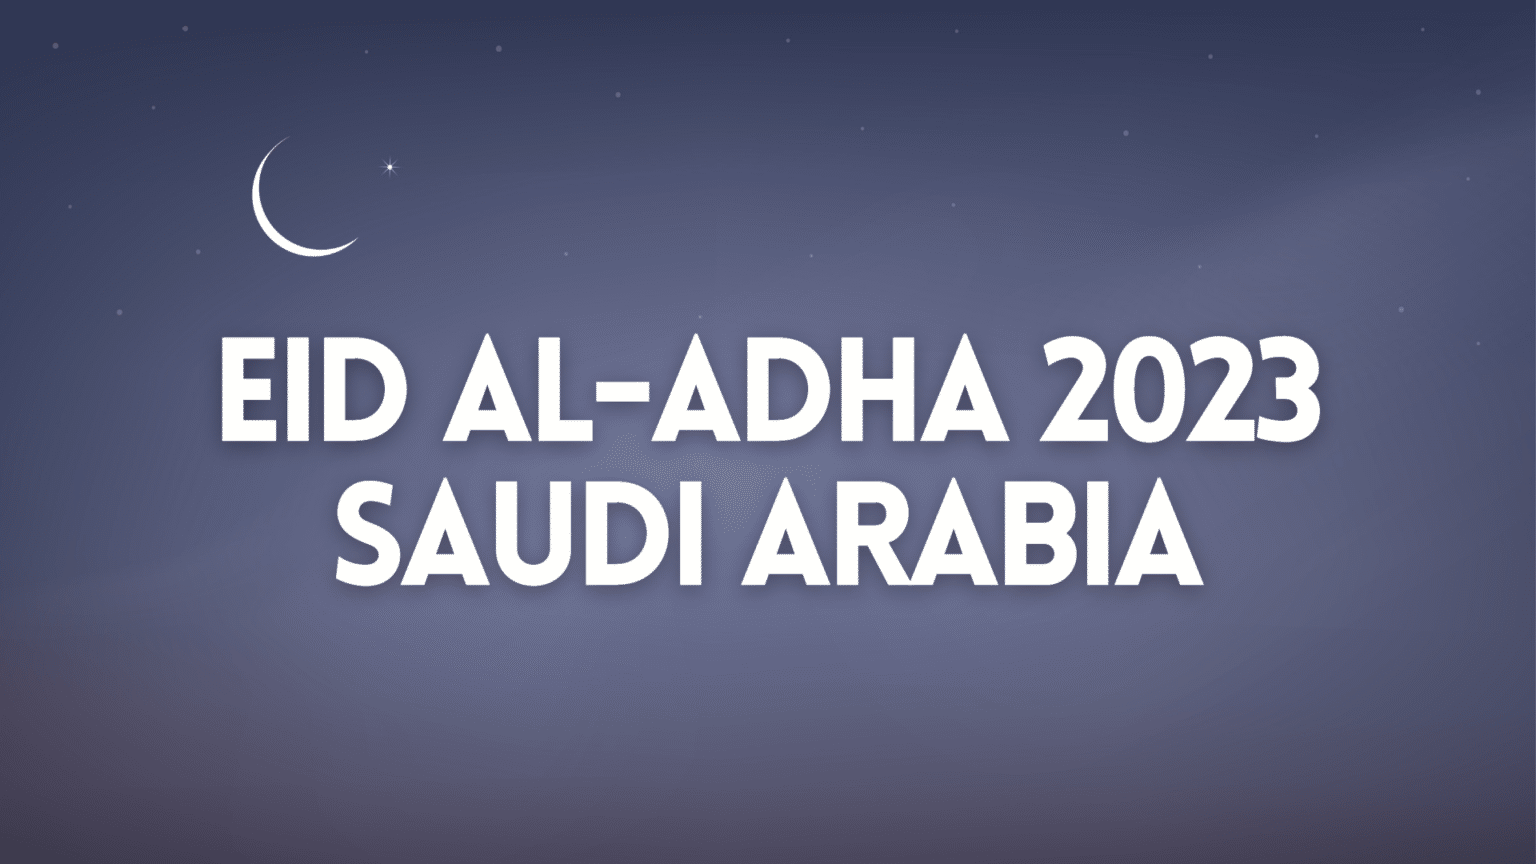 Eid AlAdha 2023 Date & Holiday in Saudi Arabia